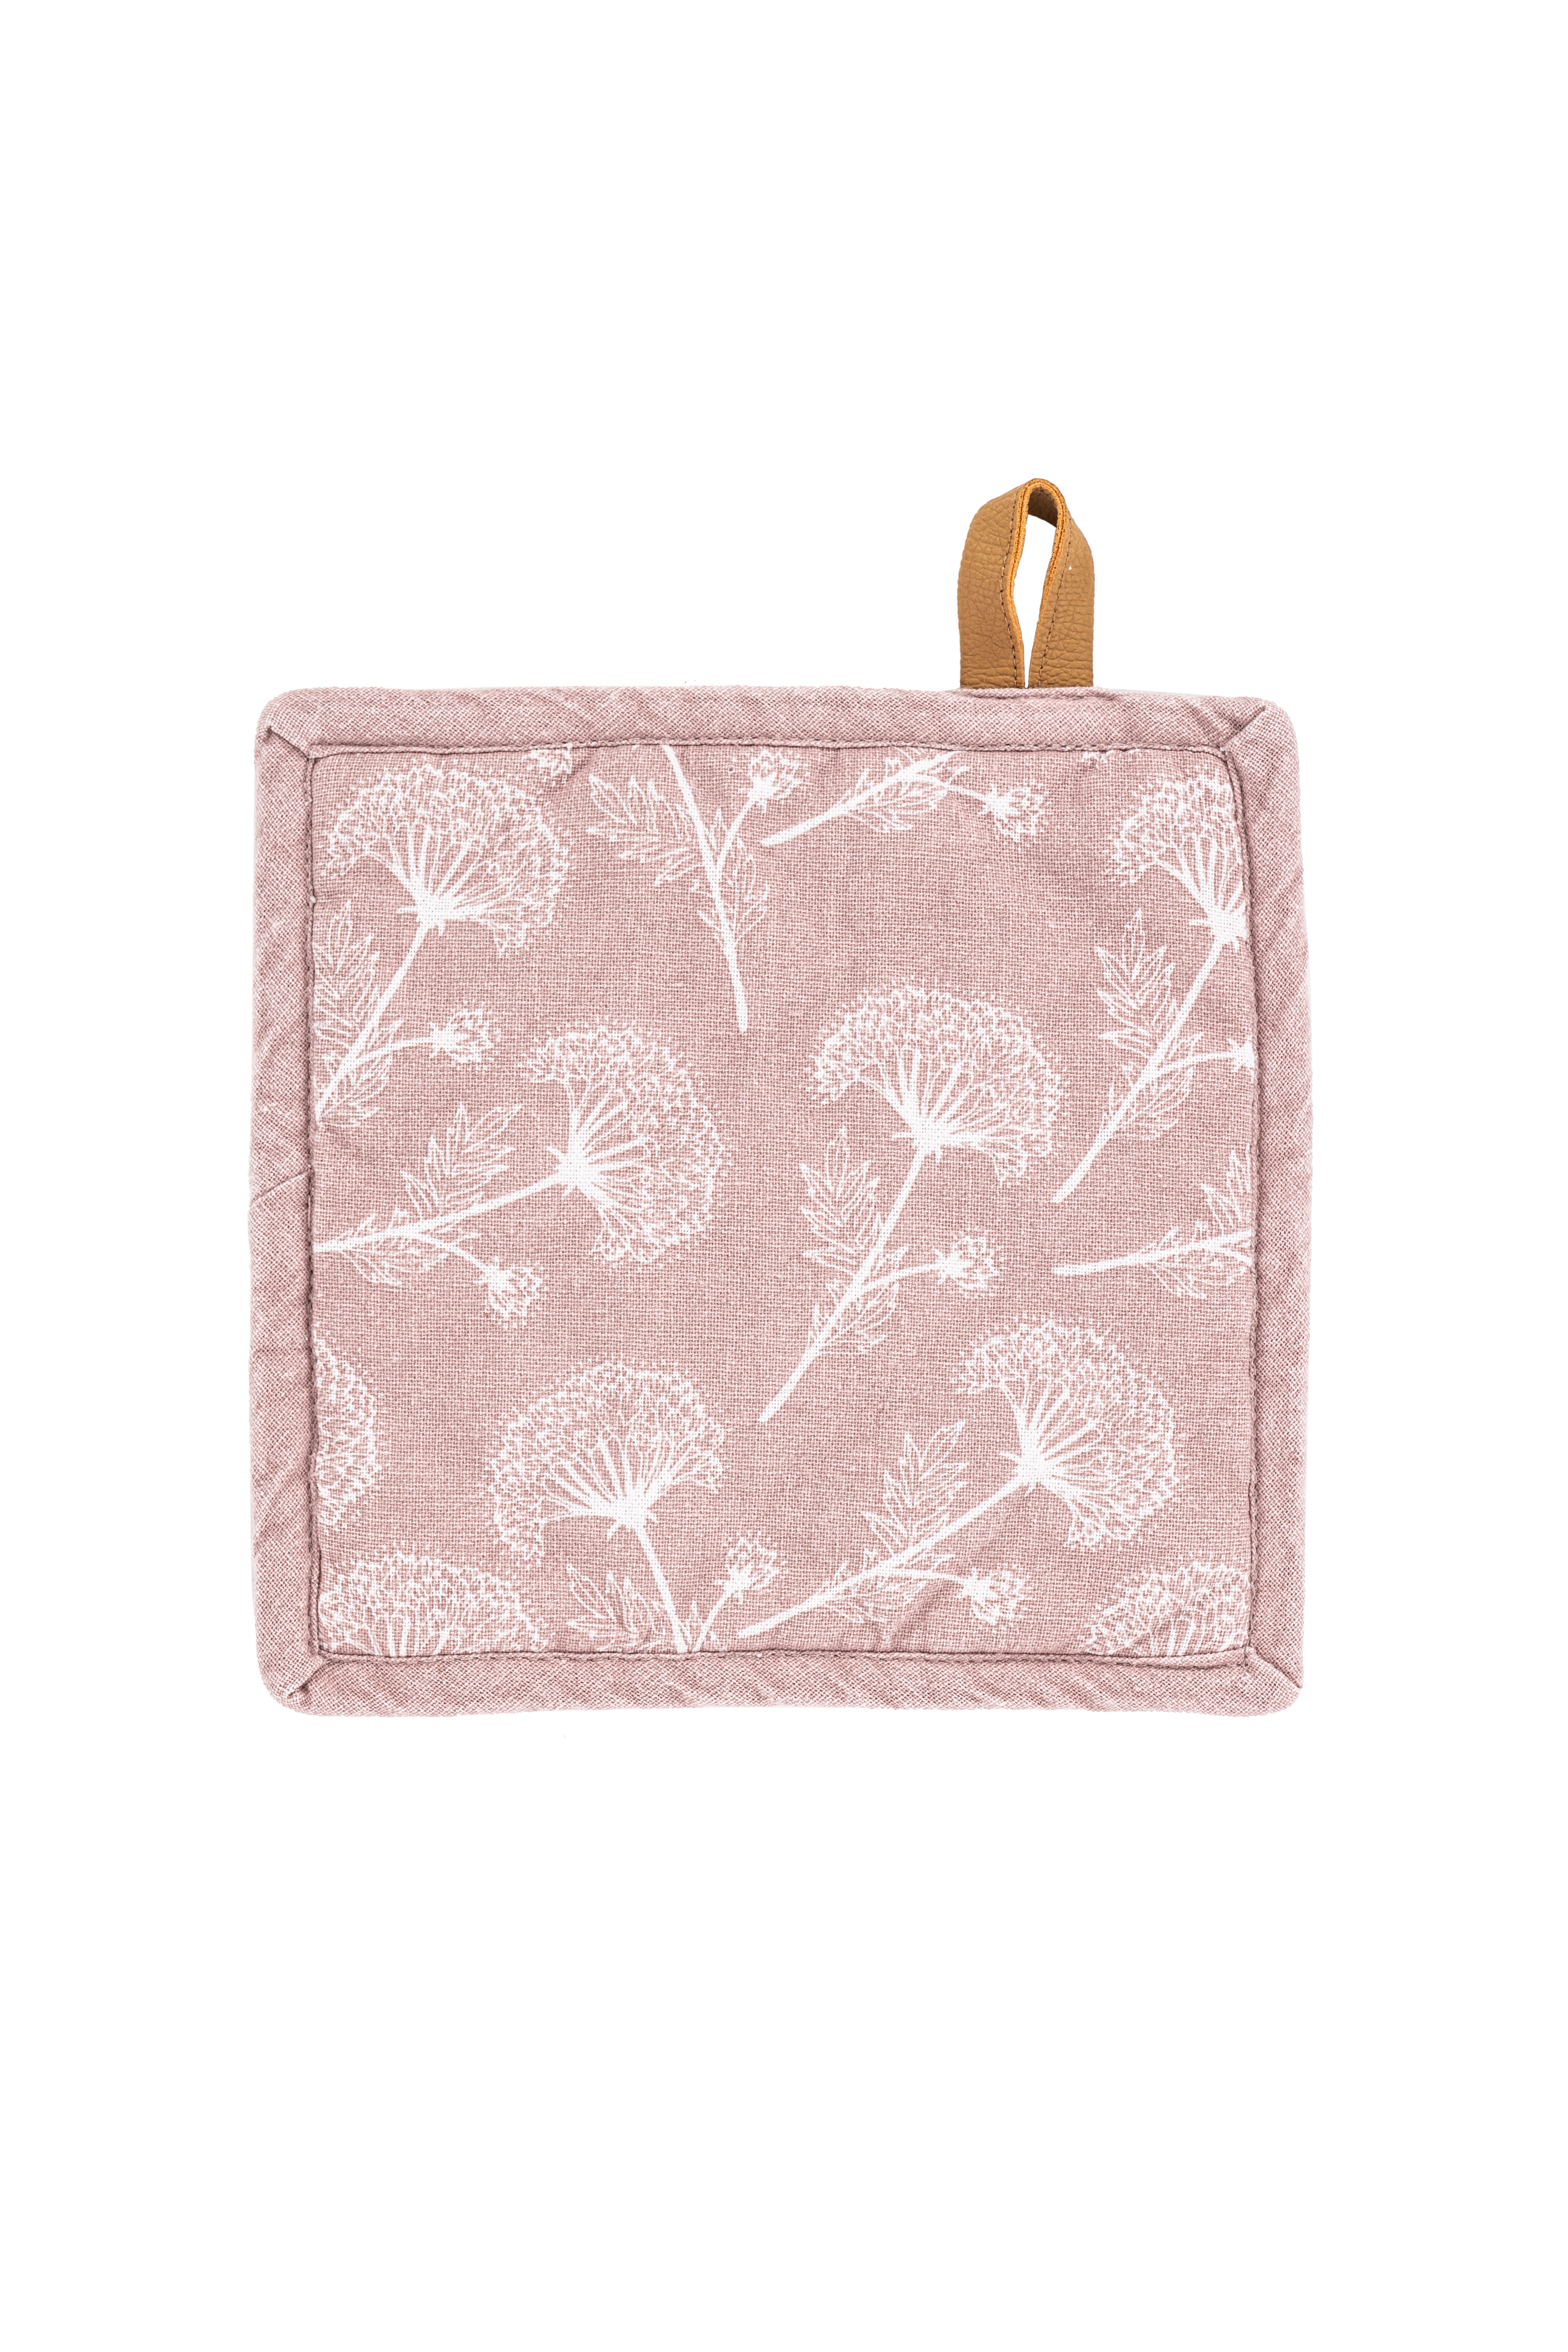 Pannenlap MYRNA, floral printed, 20x20cm - set/2, pink